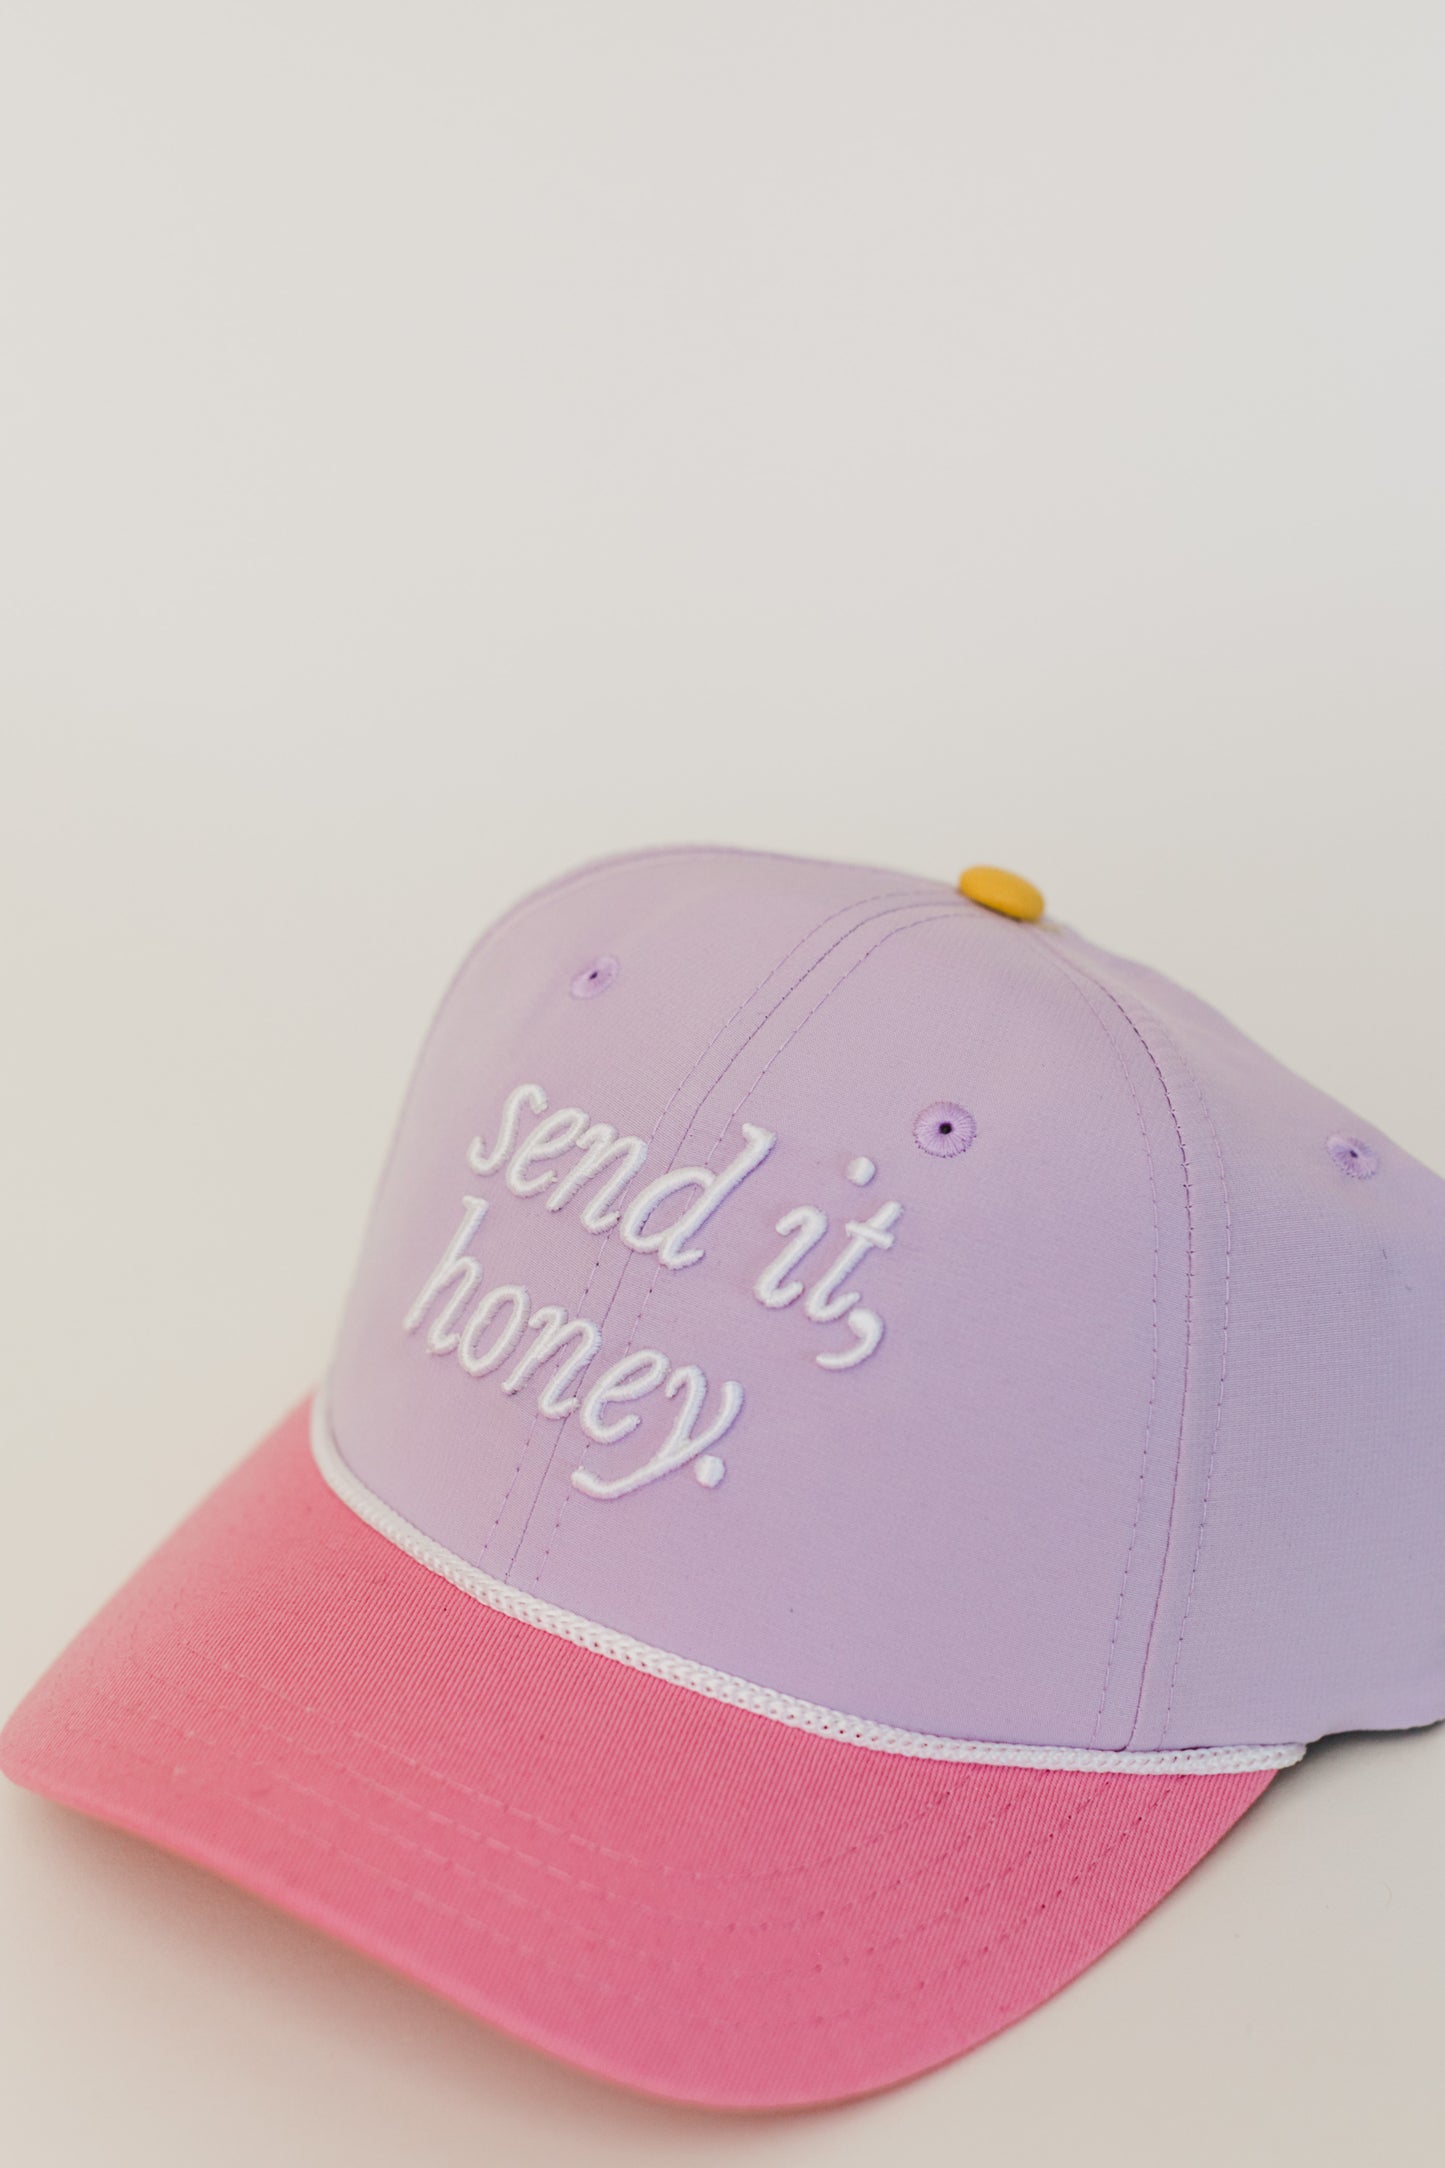 Send It, Honey Cap | Unicorn